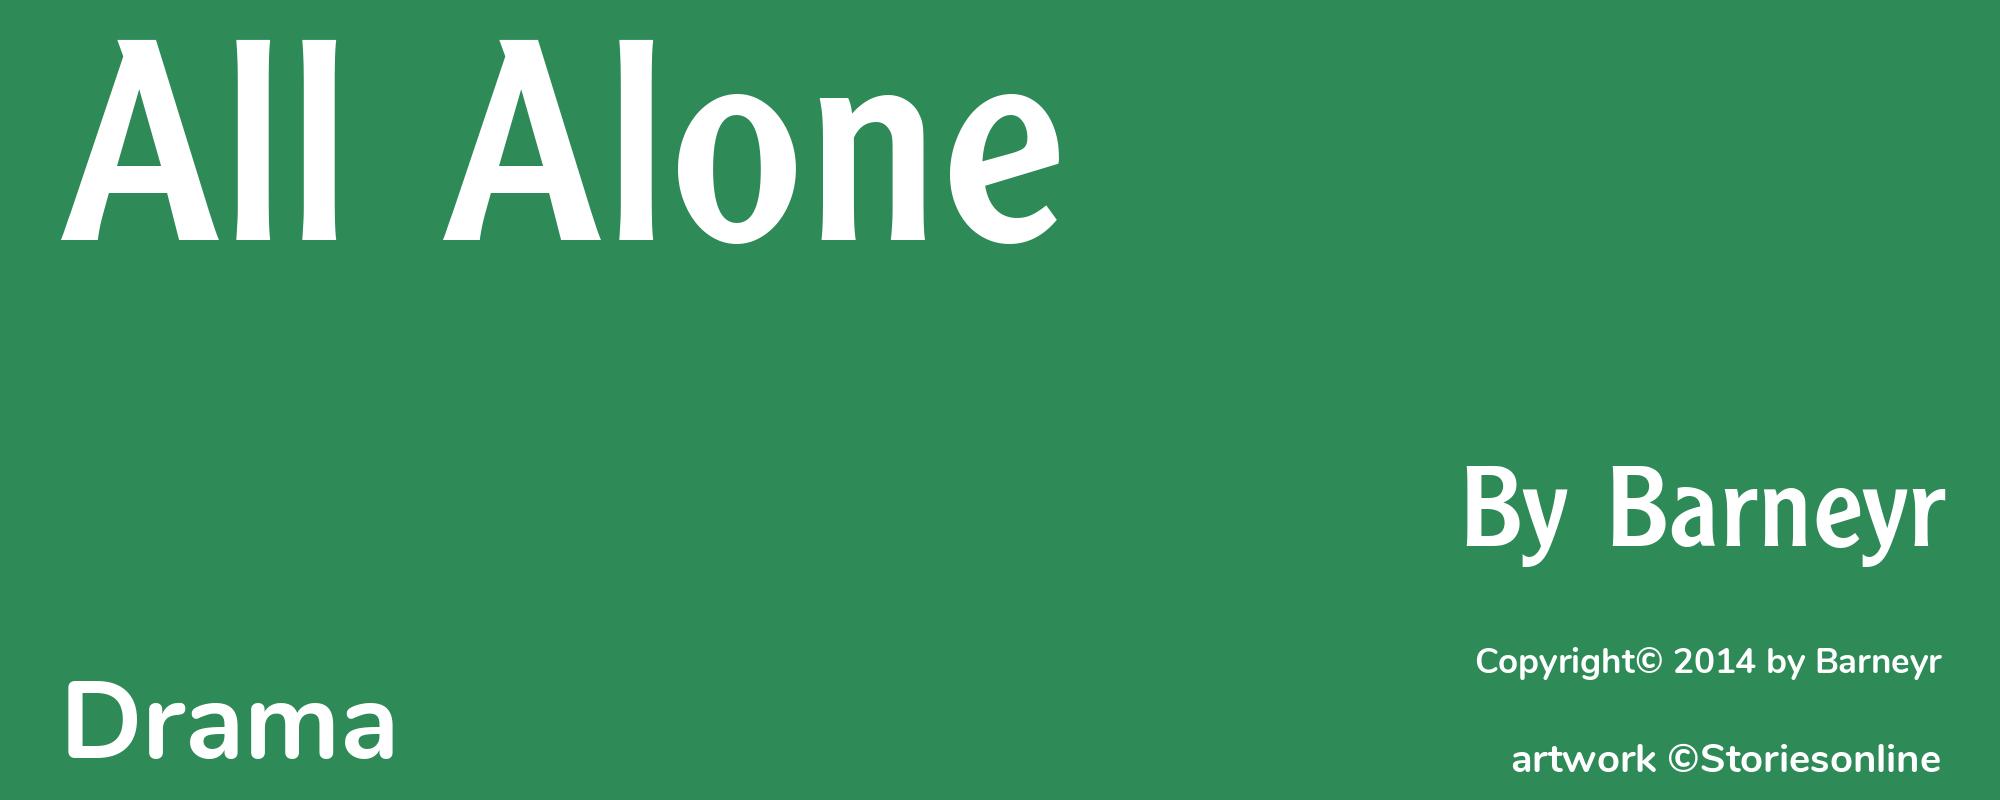 All Alone - Cover